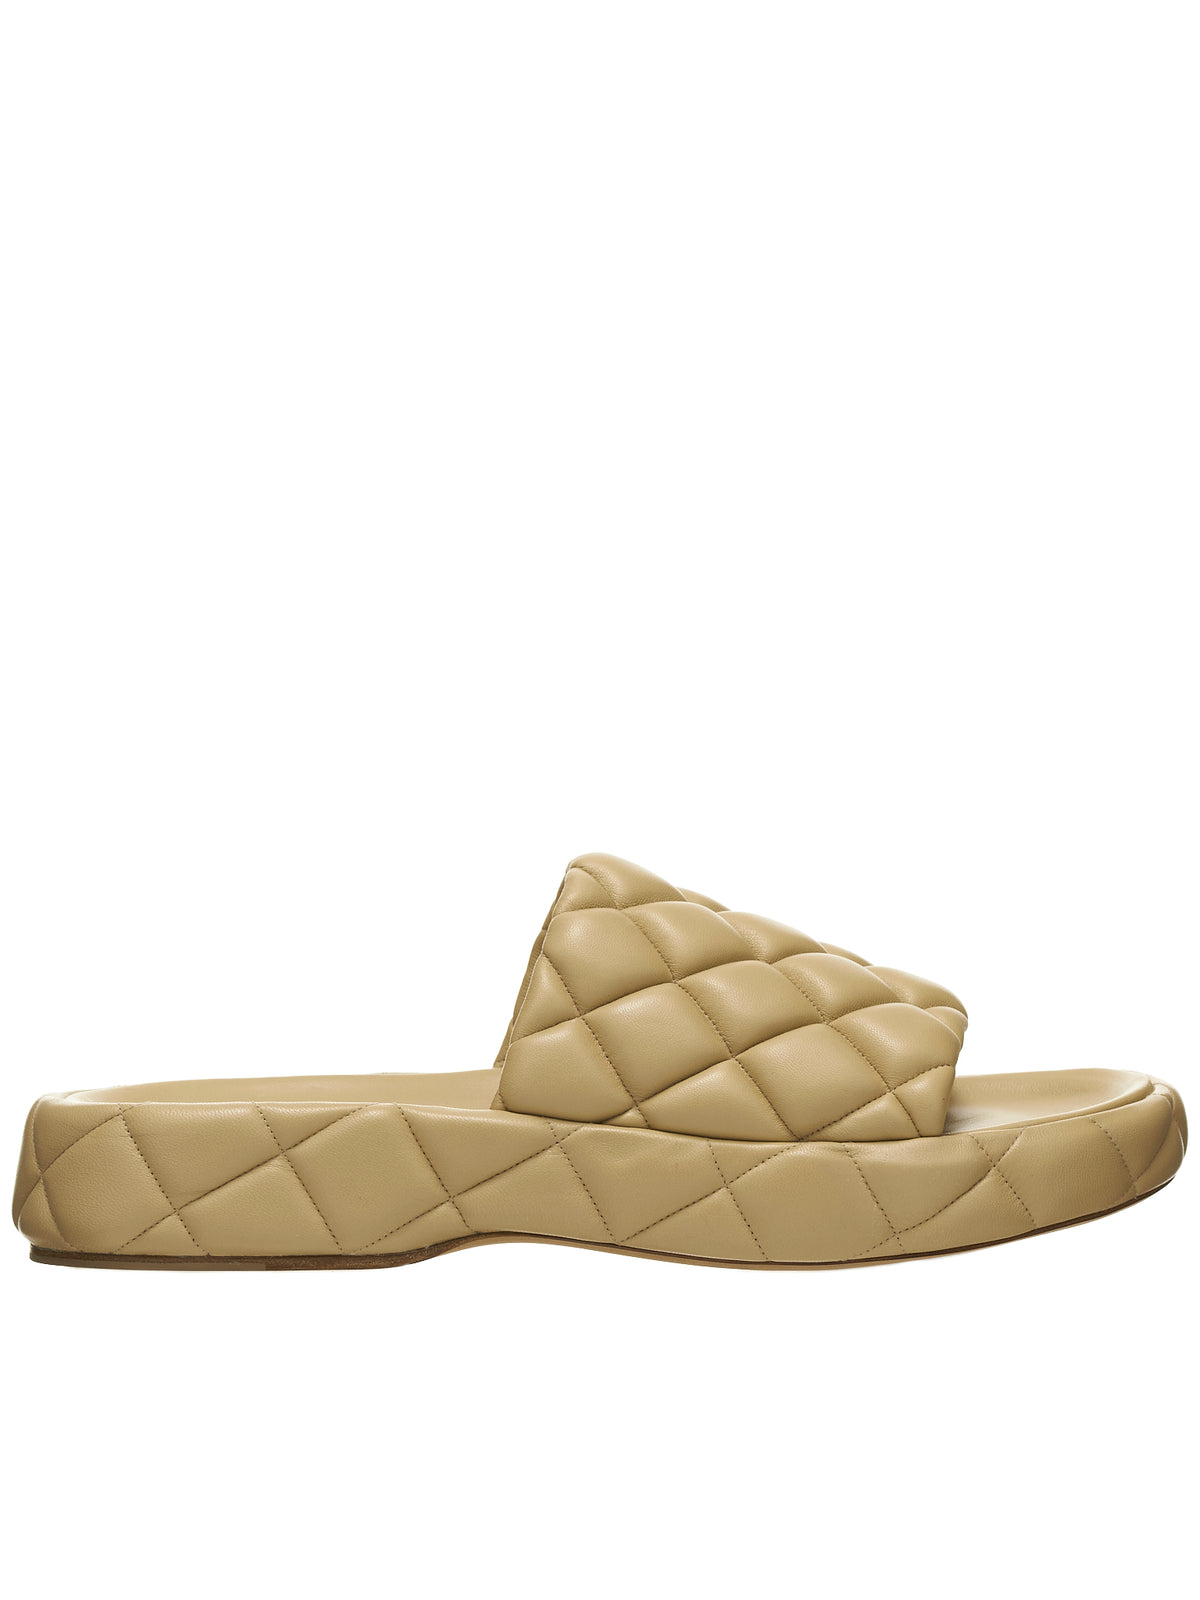 Bottega Veneta Padded Sandals | H. Lorenzo - side 